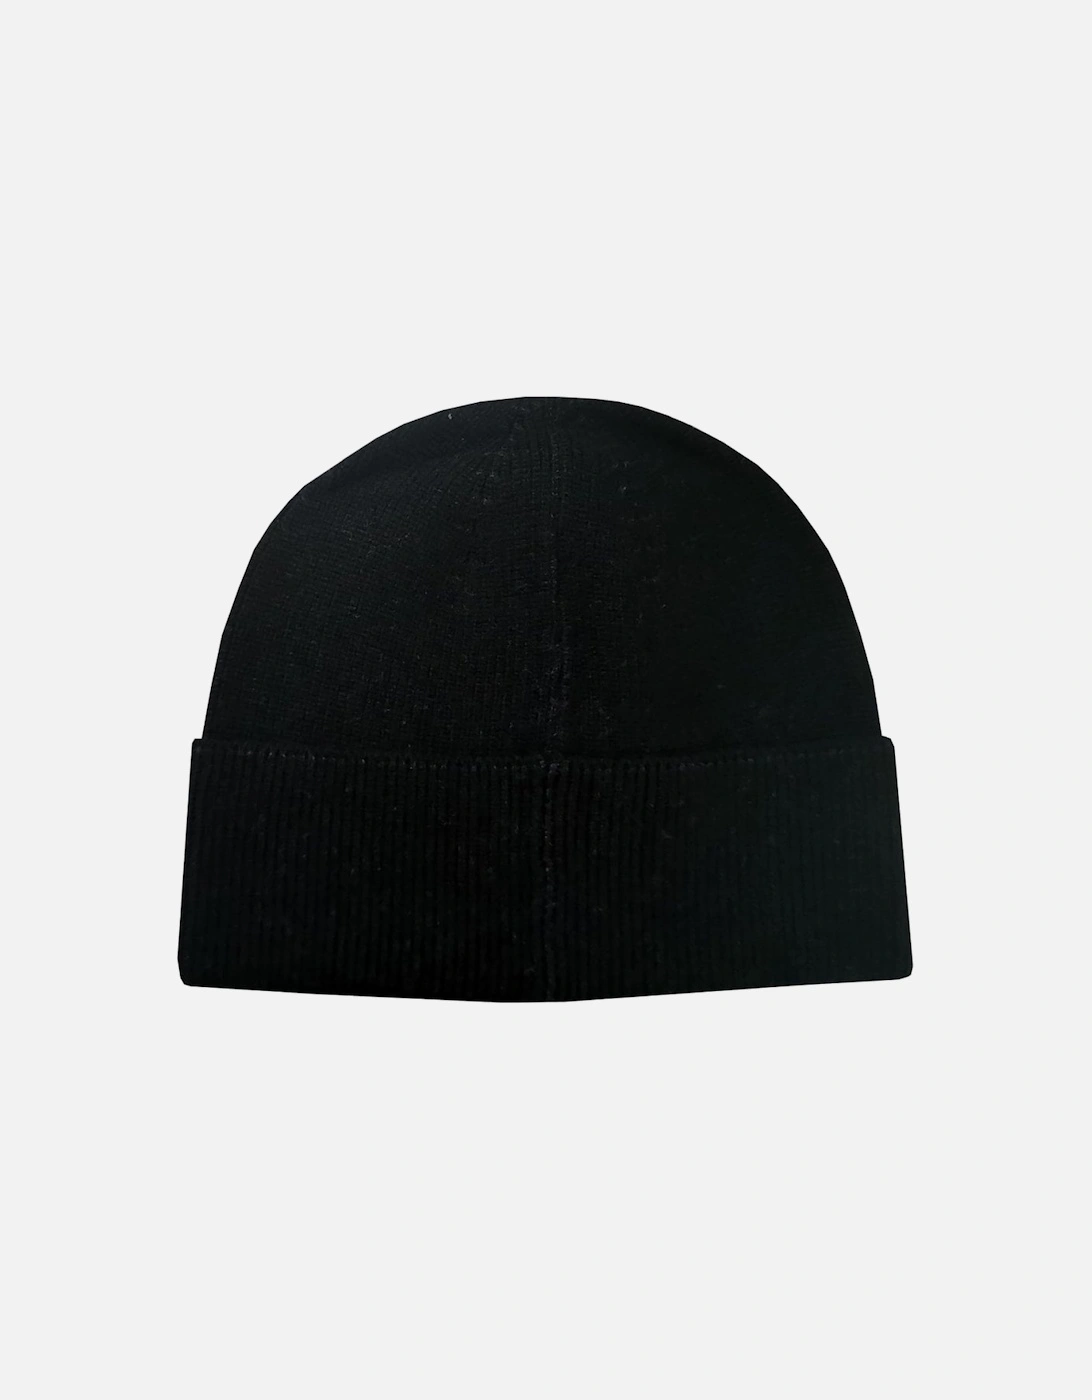 Men's Black Knitted Lamichetto Hat.